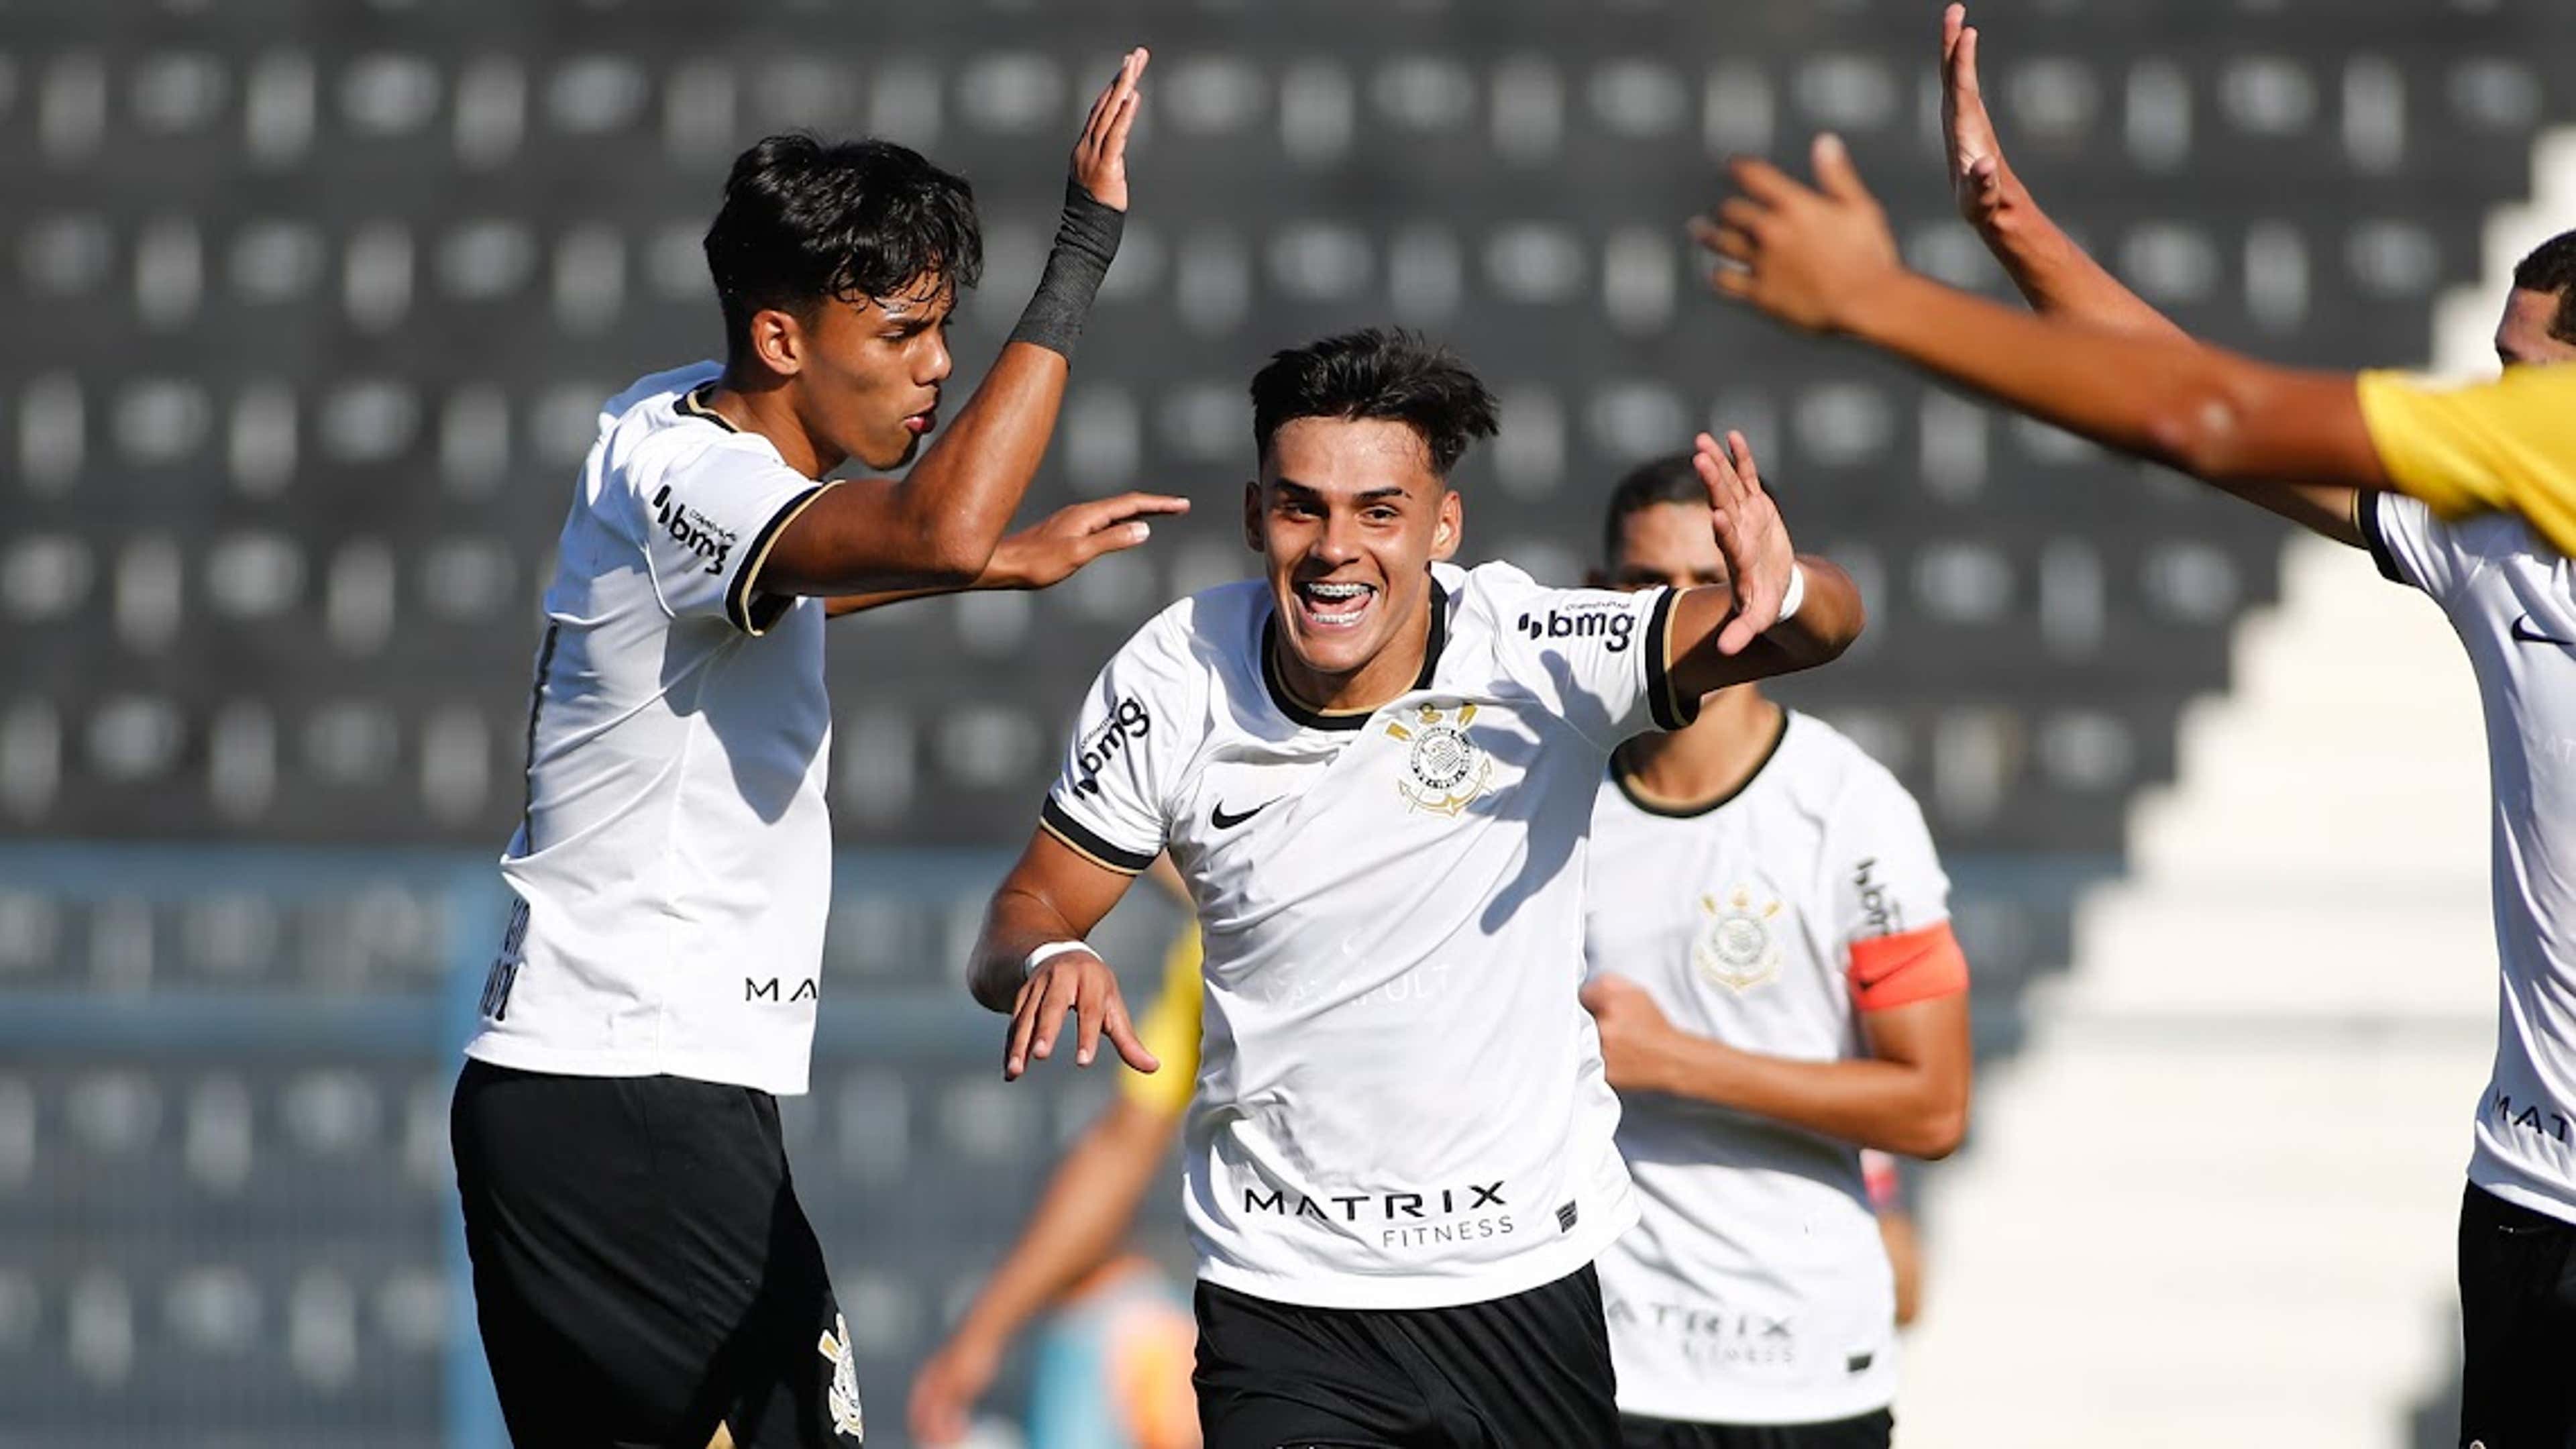 Corinthians vence o Palmeiras no jogo de ida da semifinal do